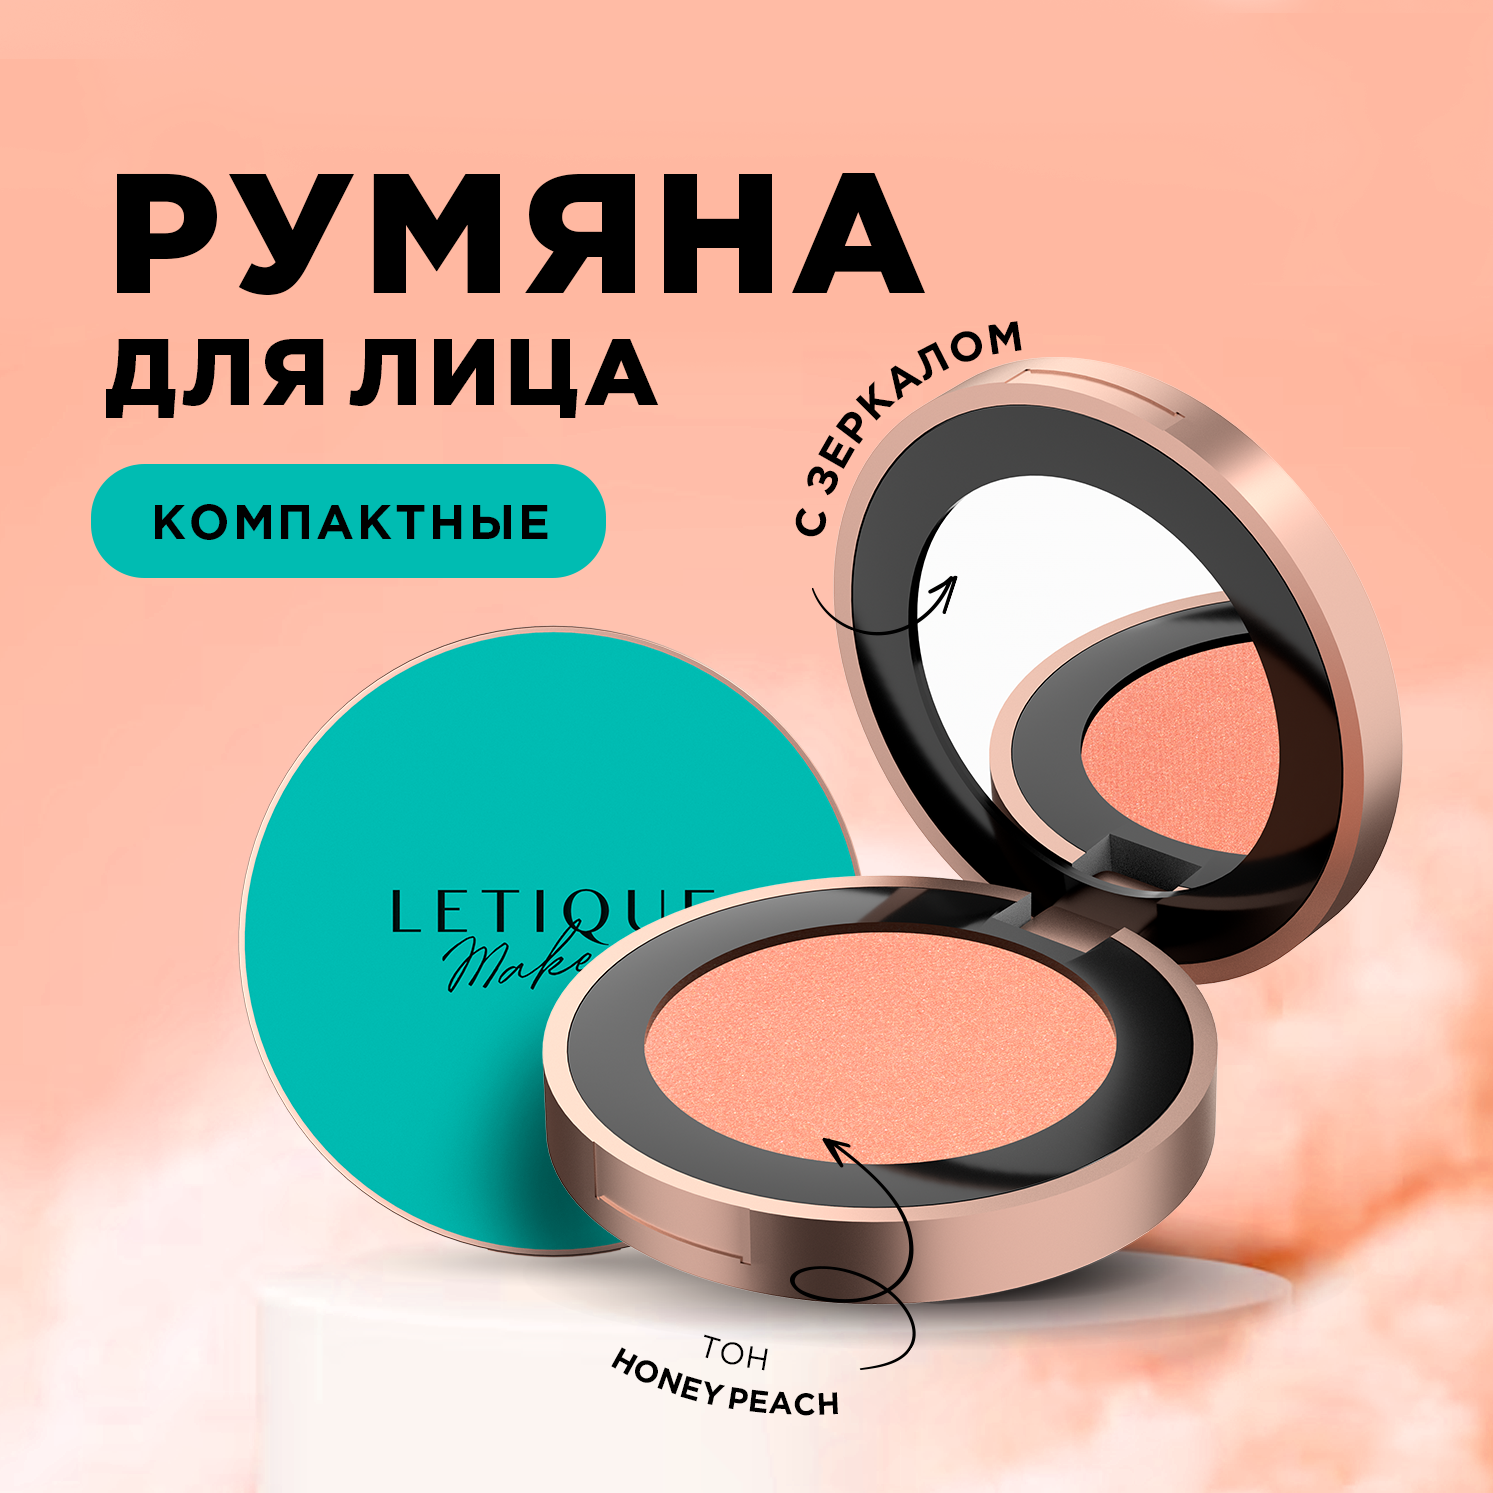 Компактные Румяна Для Лица Letique Cosmetics Bliss Touch Тон Honey Peach woman s bliss крем для лица с ретинолом 0 5% retinol care 50